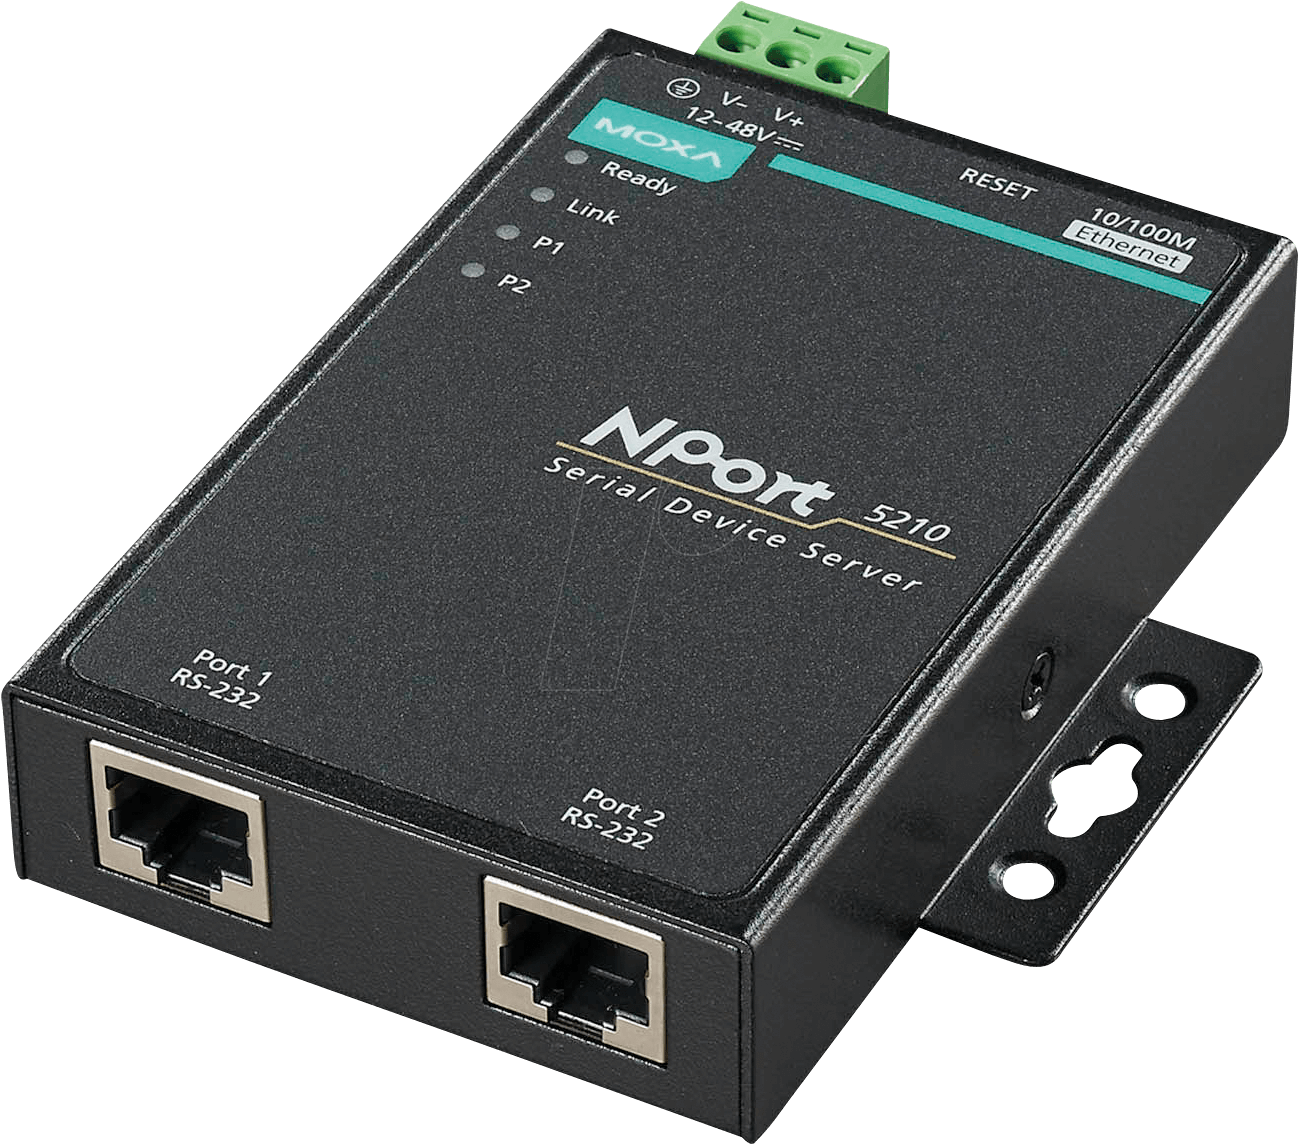 MOXA RS-232 N-Port Serial Device Server 